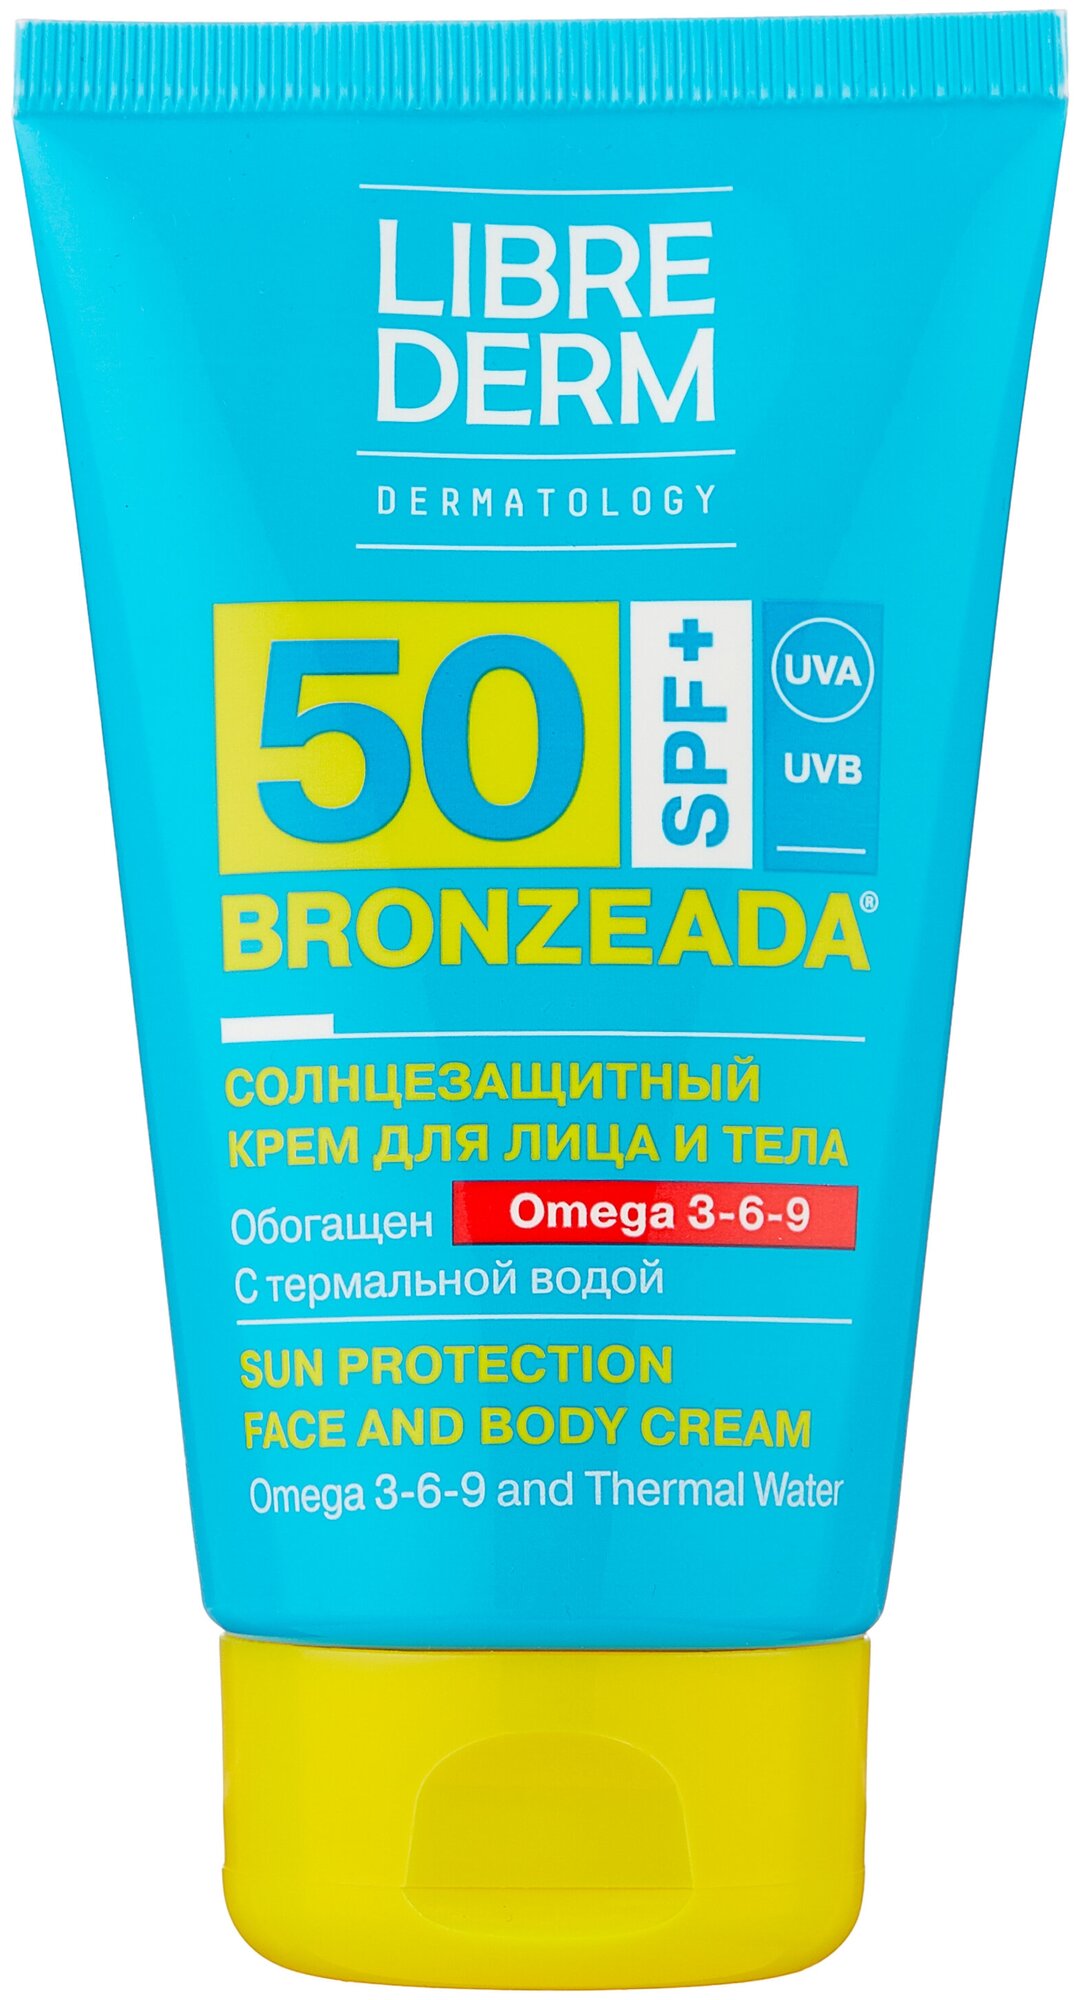 Librederm Librederm Bronzeada солнцезащитный крем для лица и тела Omega 3-6-9 SPF 50, 150 мл